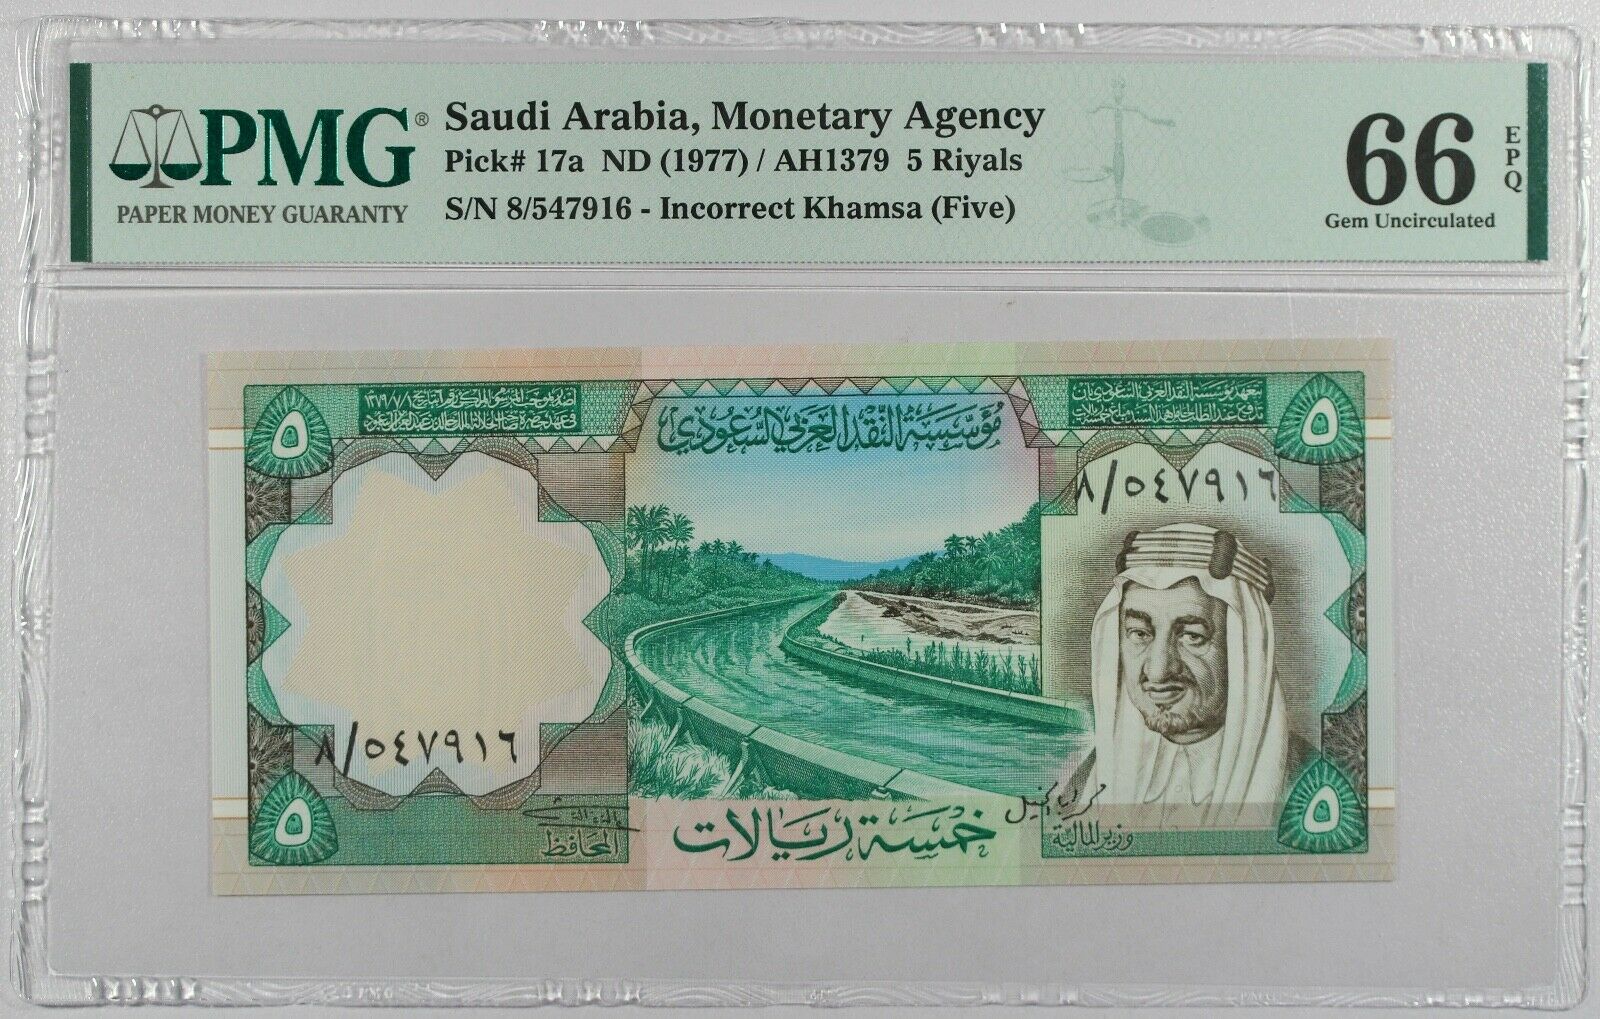 Saudi Arabia 5 Riyals Incorrect Khamsa, ND/1977 ... P 17a ... PMG 66 EPQ Gem UNC